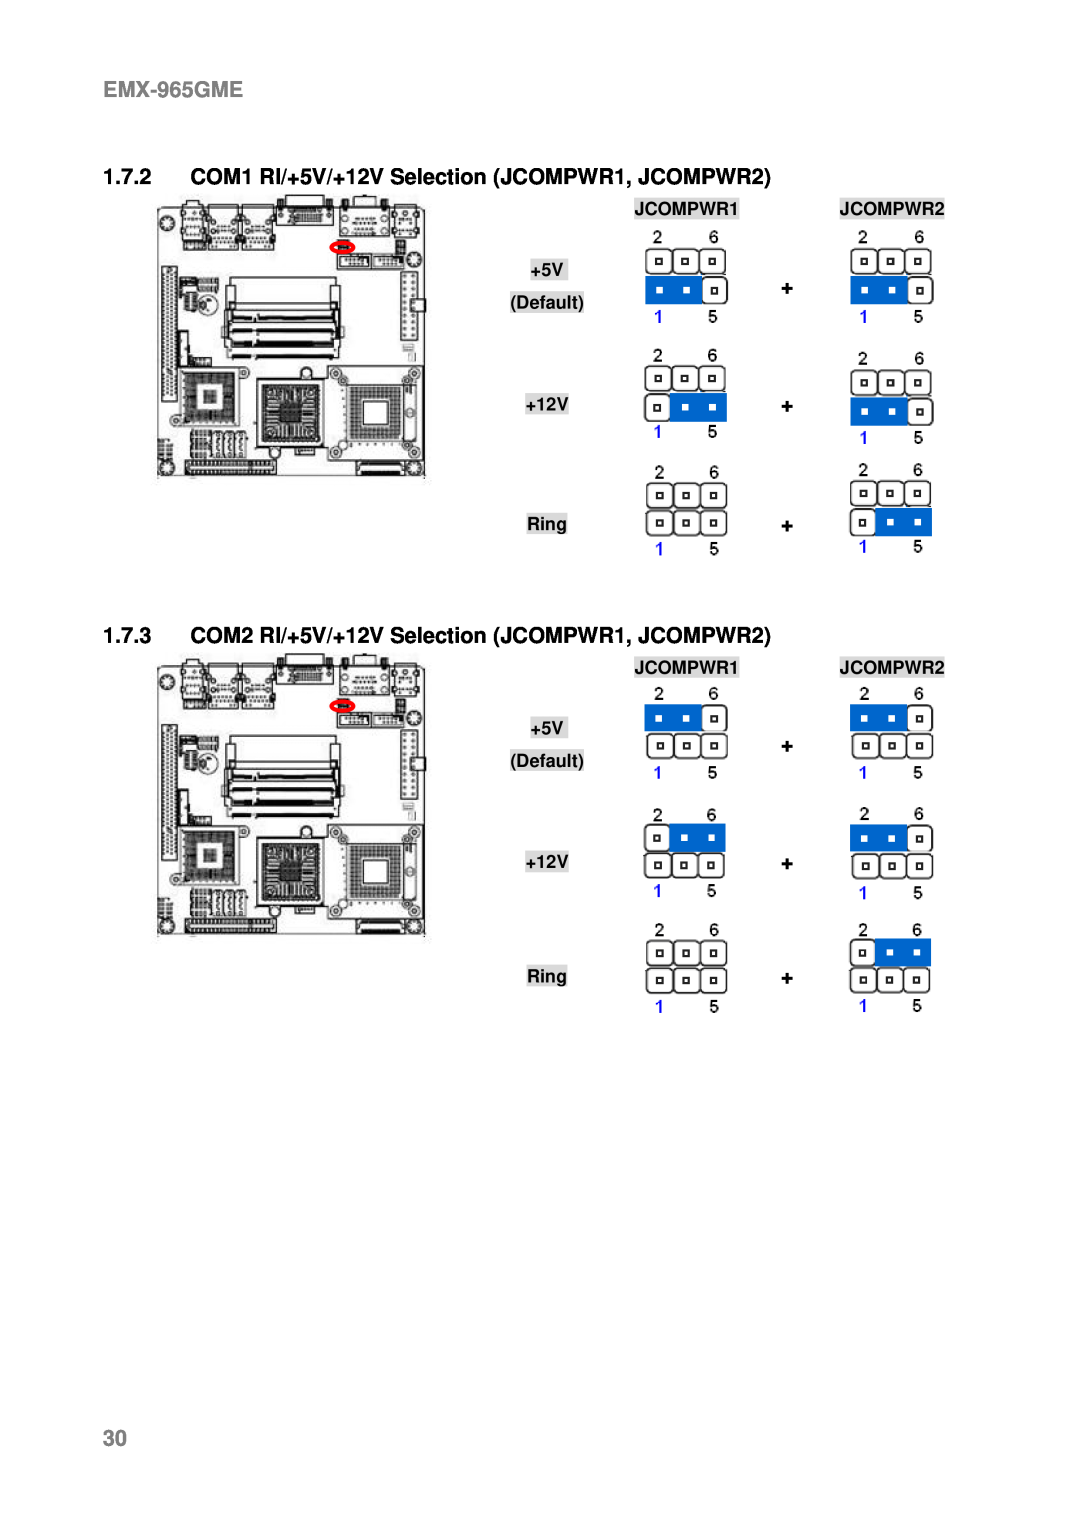 Intel EMX-965GME user manual JCOMPWR1 JCOMPWR2 +5V, Default, +12V, Ring 